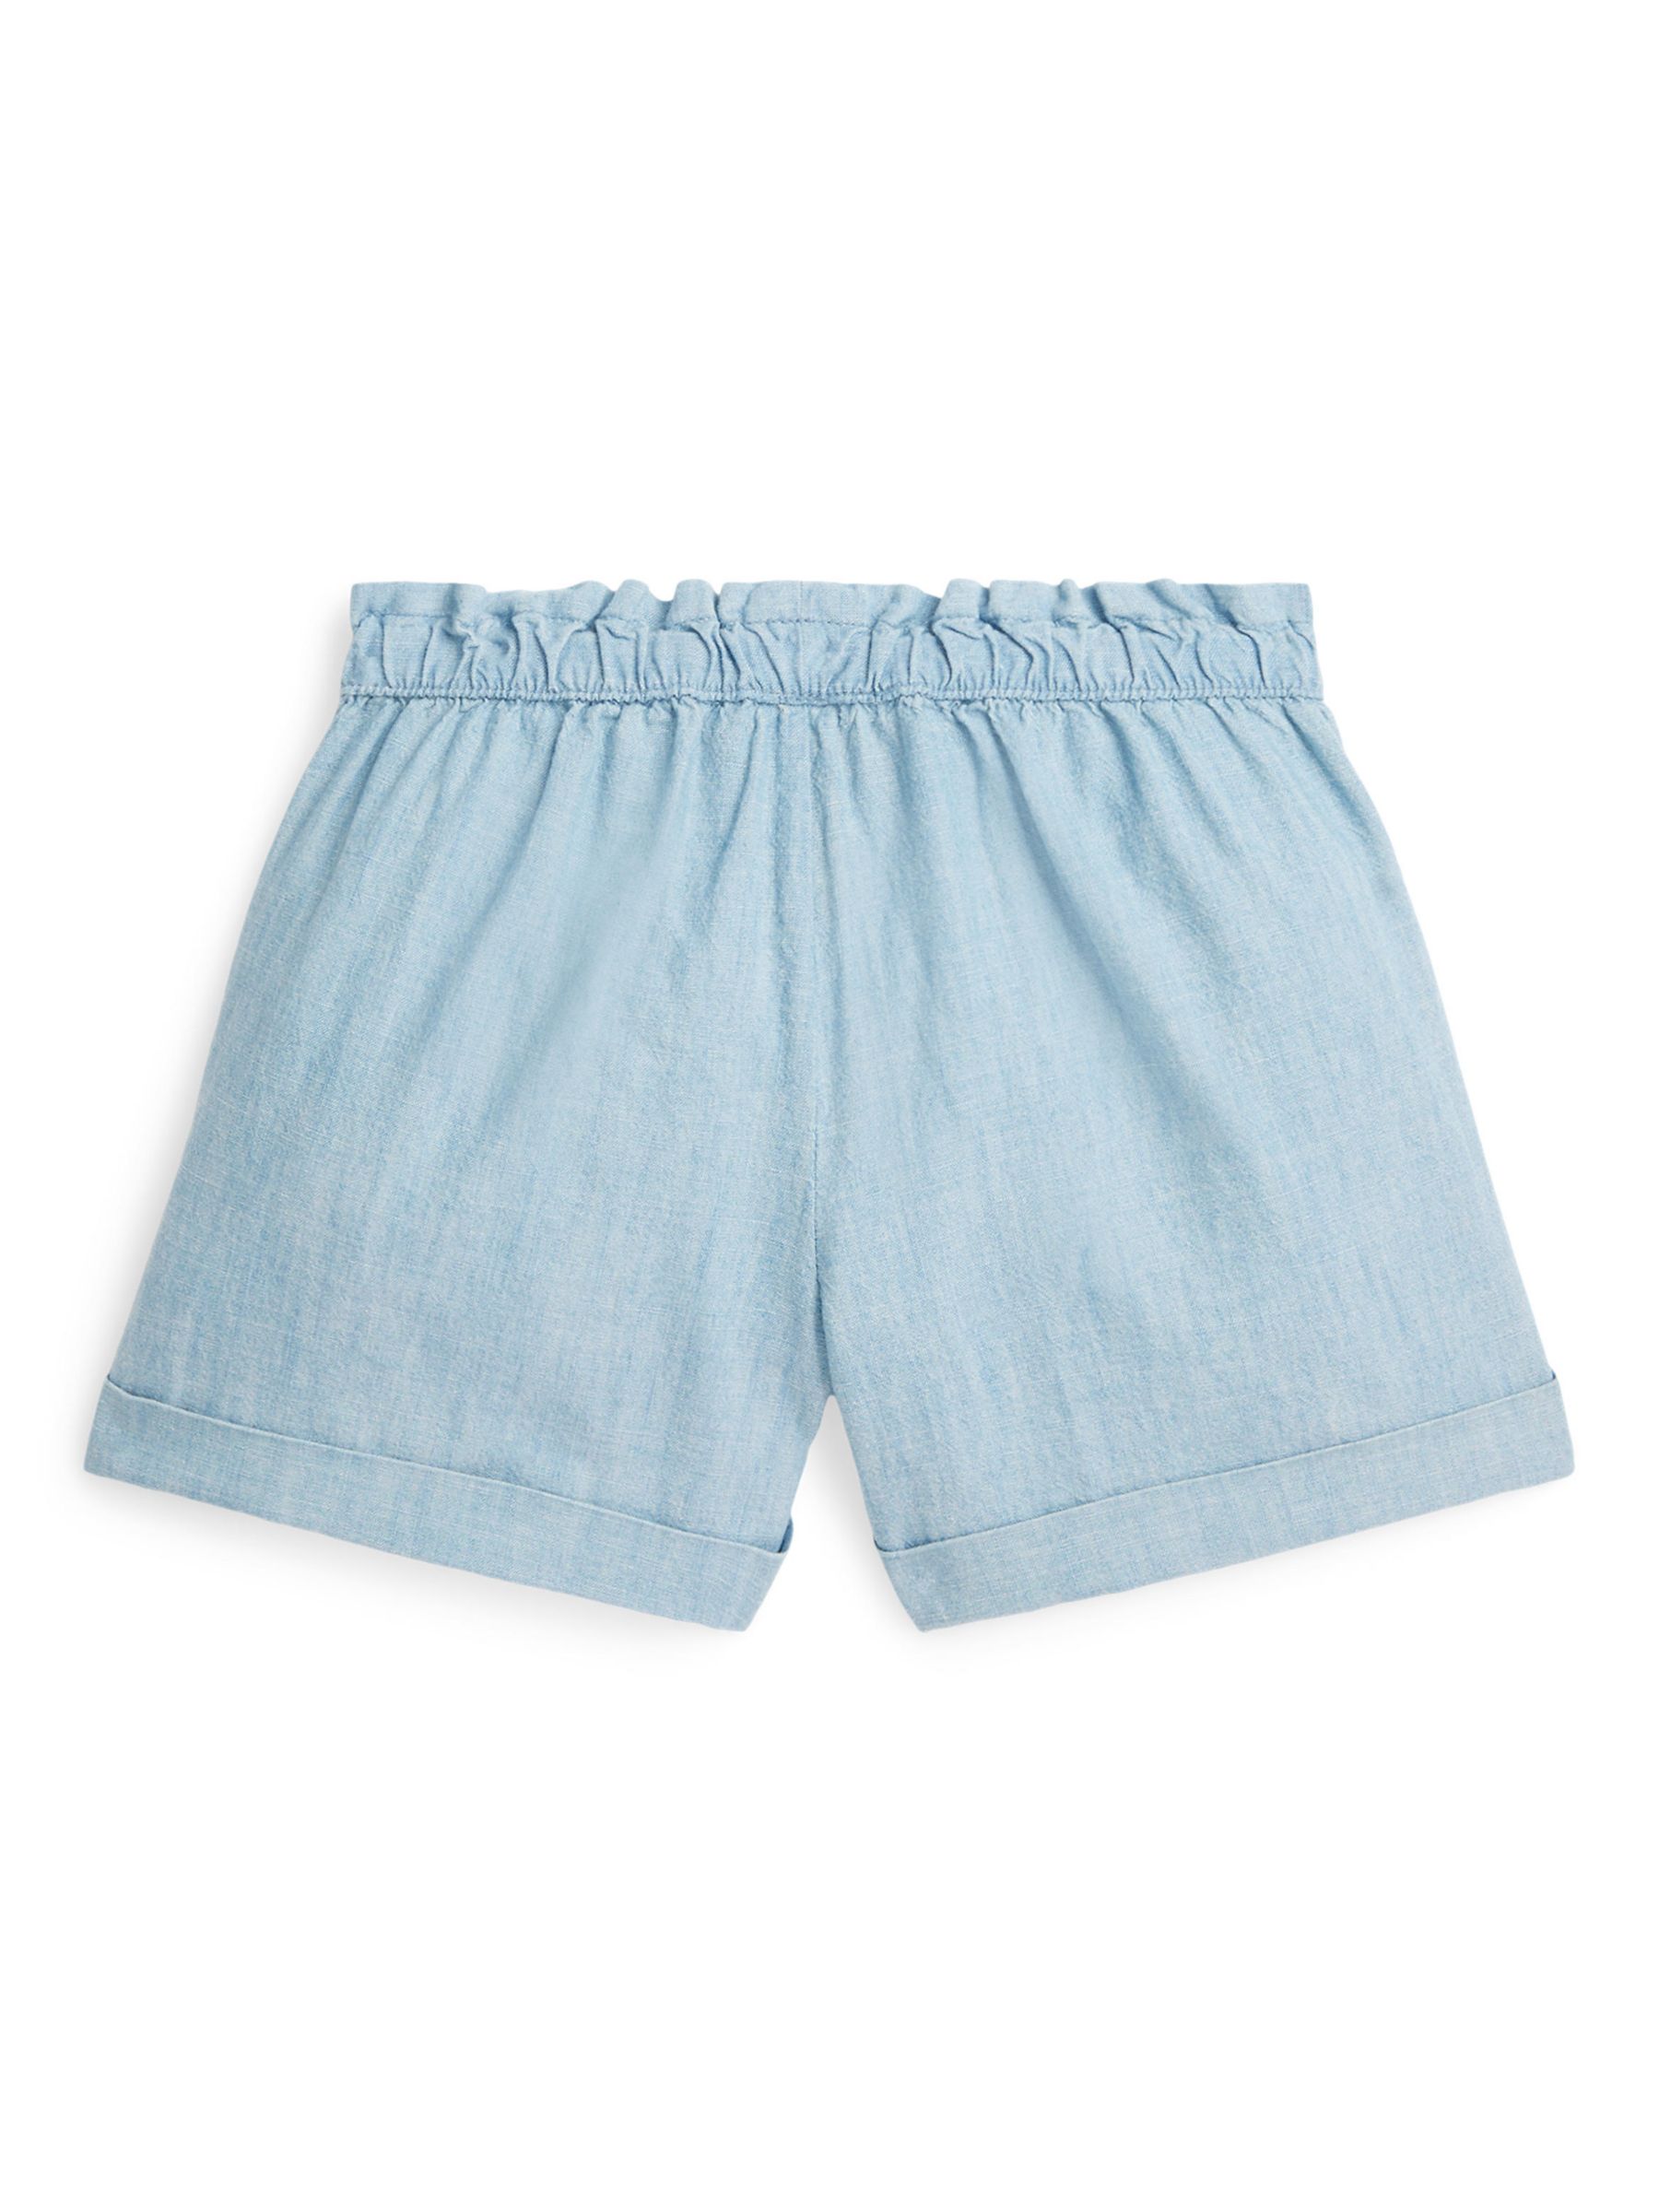 Ralph Lauren Kids' Camp Bottom Shorts, Medium Wash, 4 years